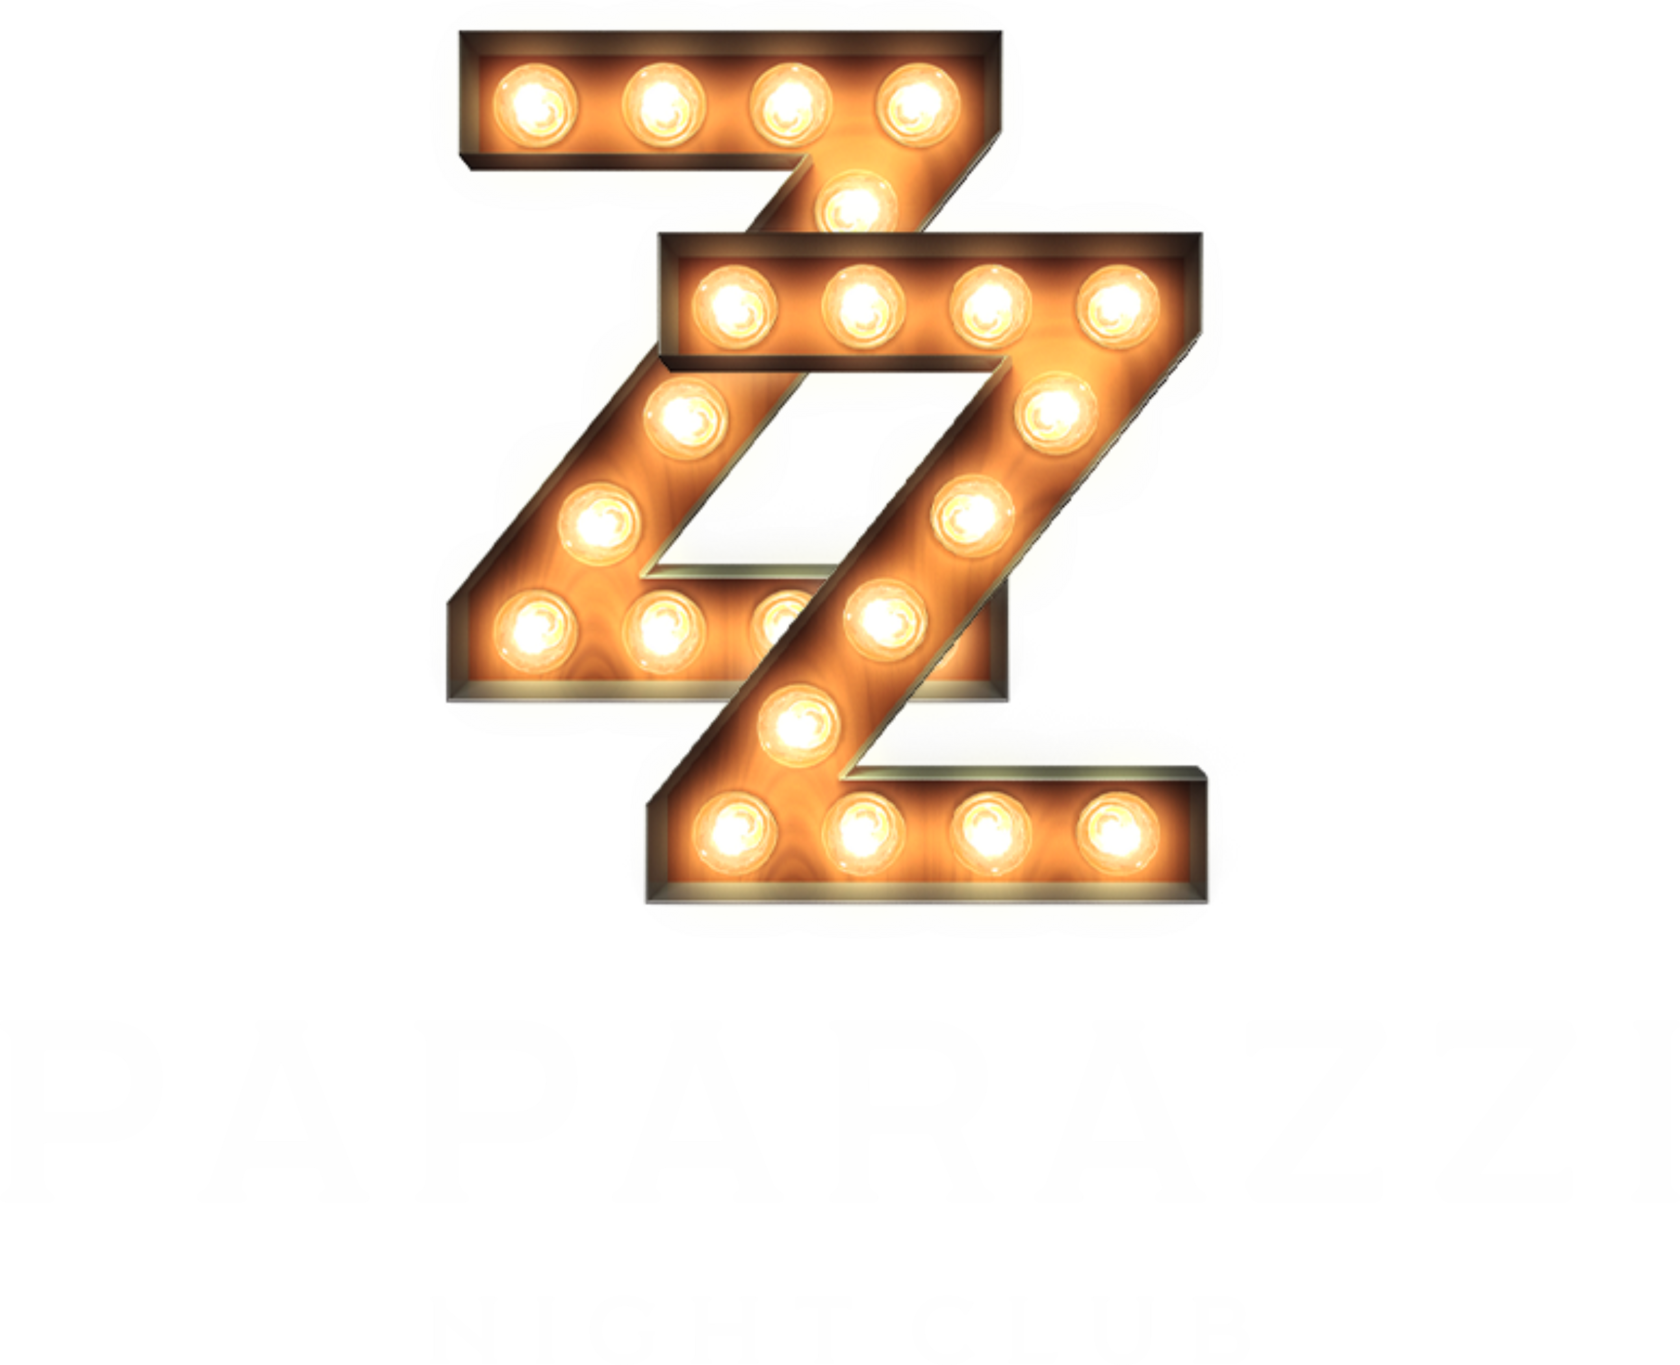 Nightclub in Tallinn | Paparazzi | Nightlife | Viru 18 | Папарацци | Ночной клуб в Таллинне | Тусовки